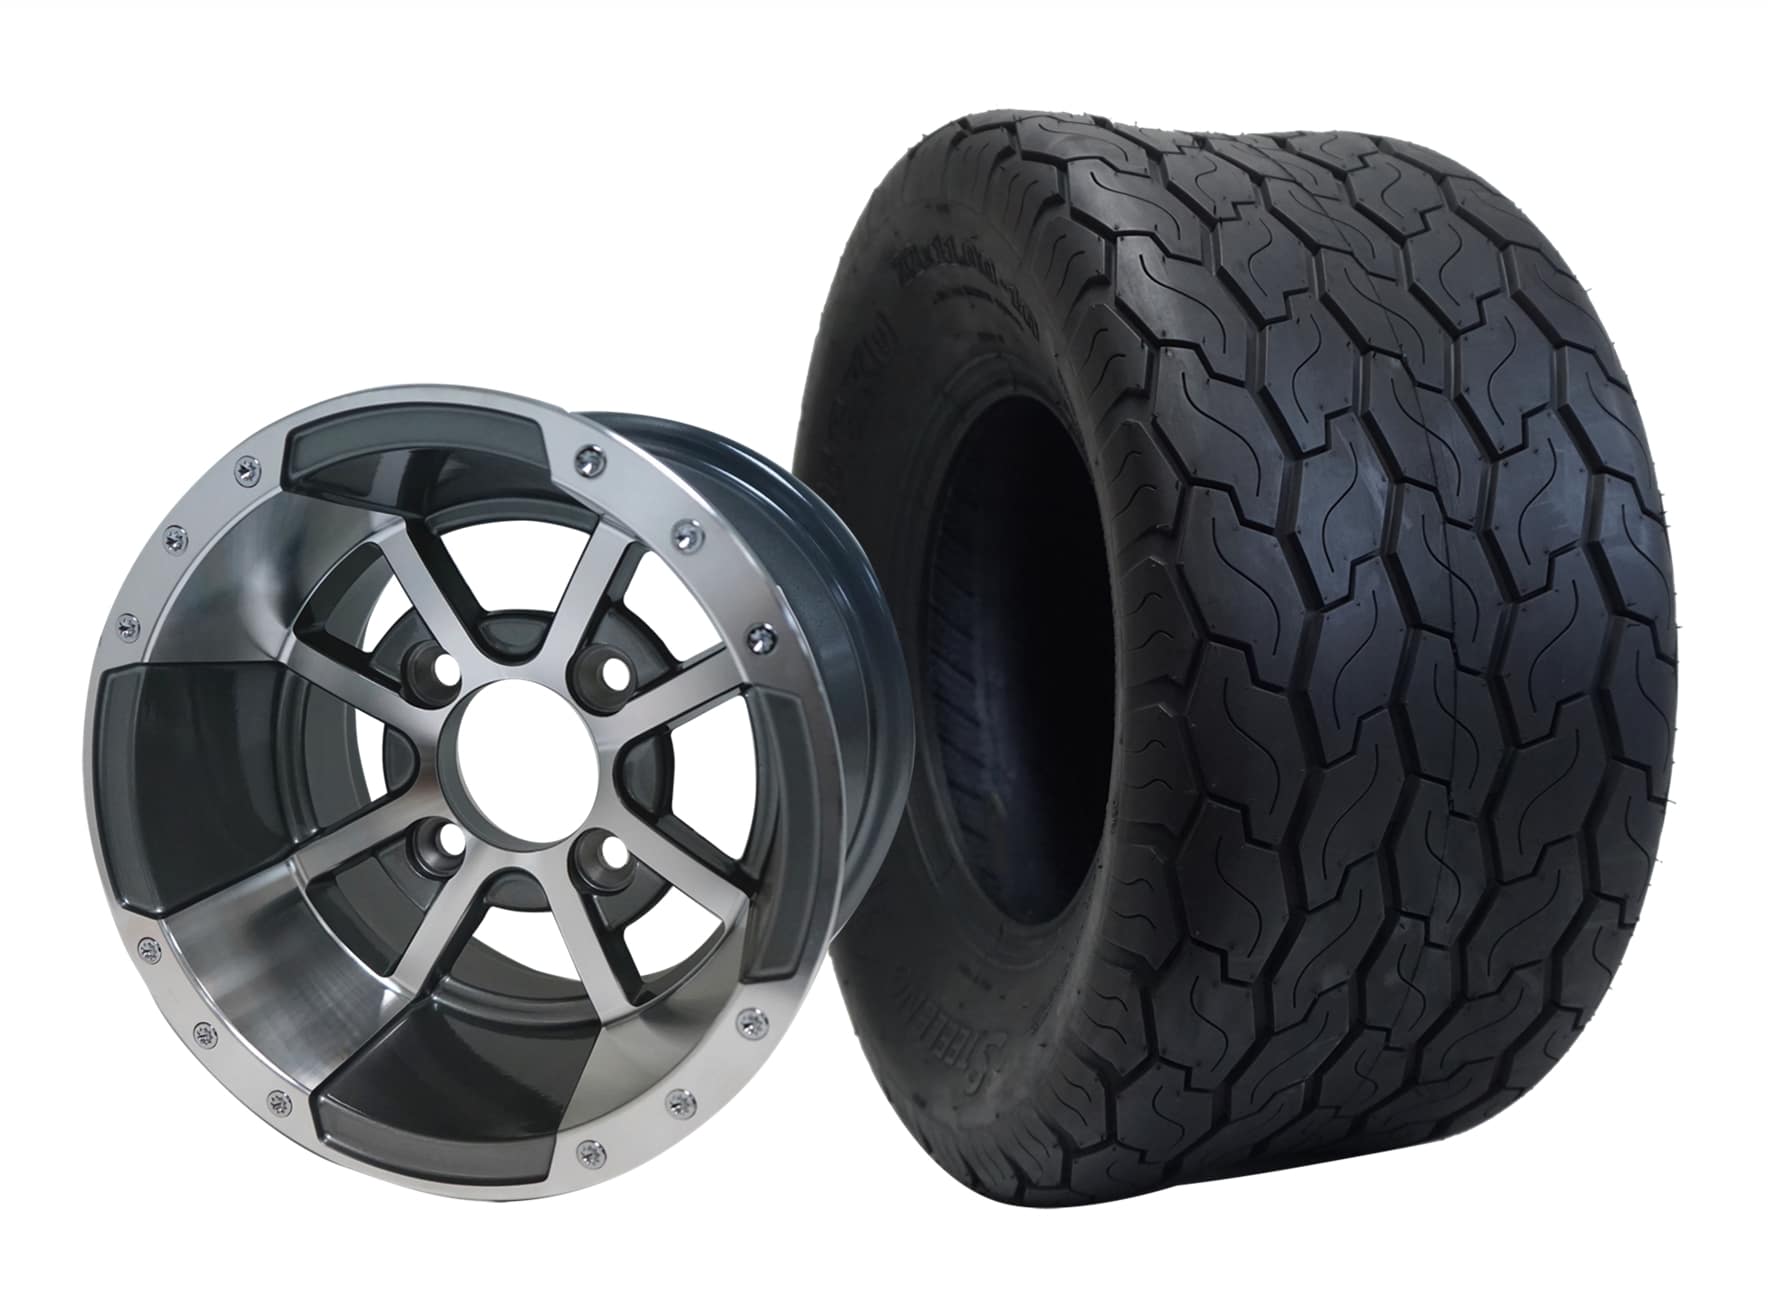 BNDL-TR1001-WH1014-CC0001-LN0001 10" Storm Trooper Chrome Wheel Aluminum Allow & 18" x9" -10" Gecko All Terrain Tire 4x